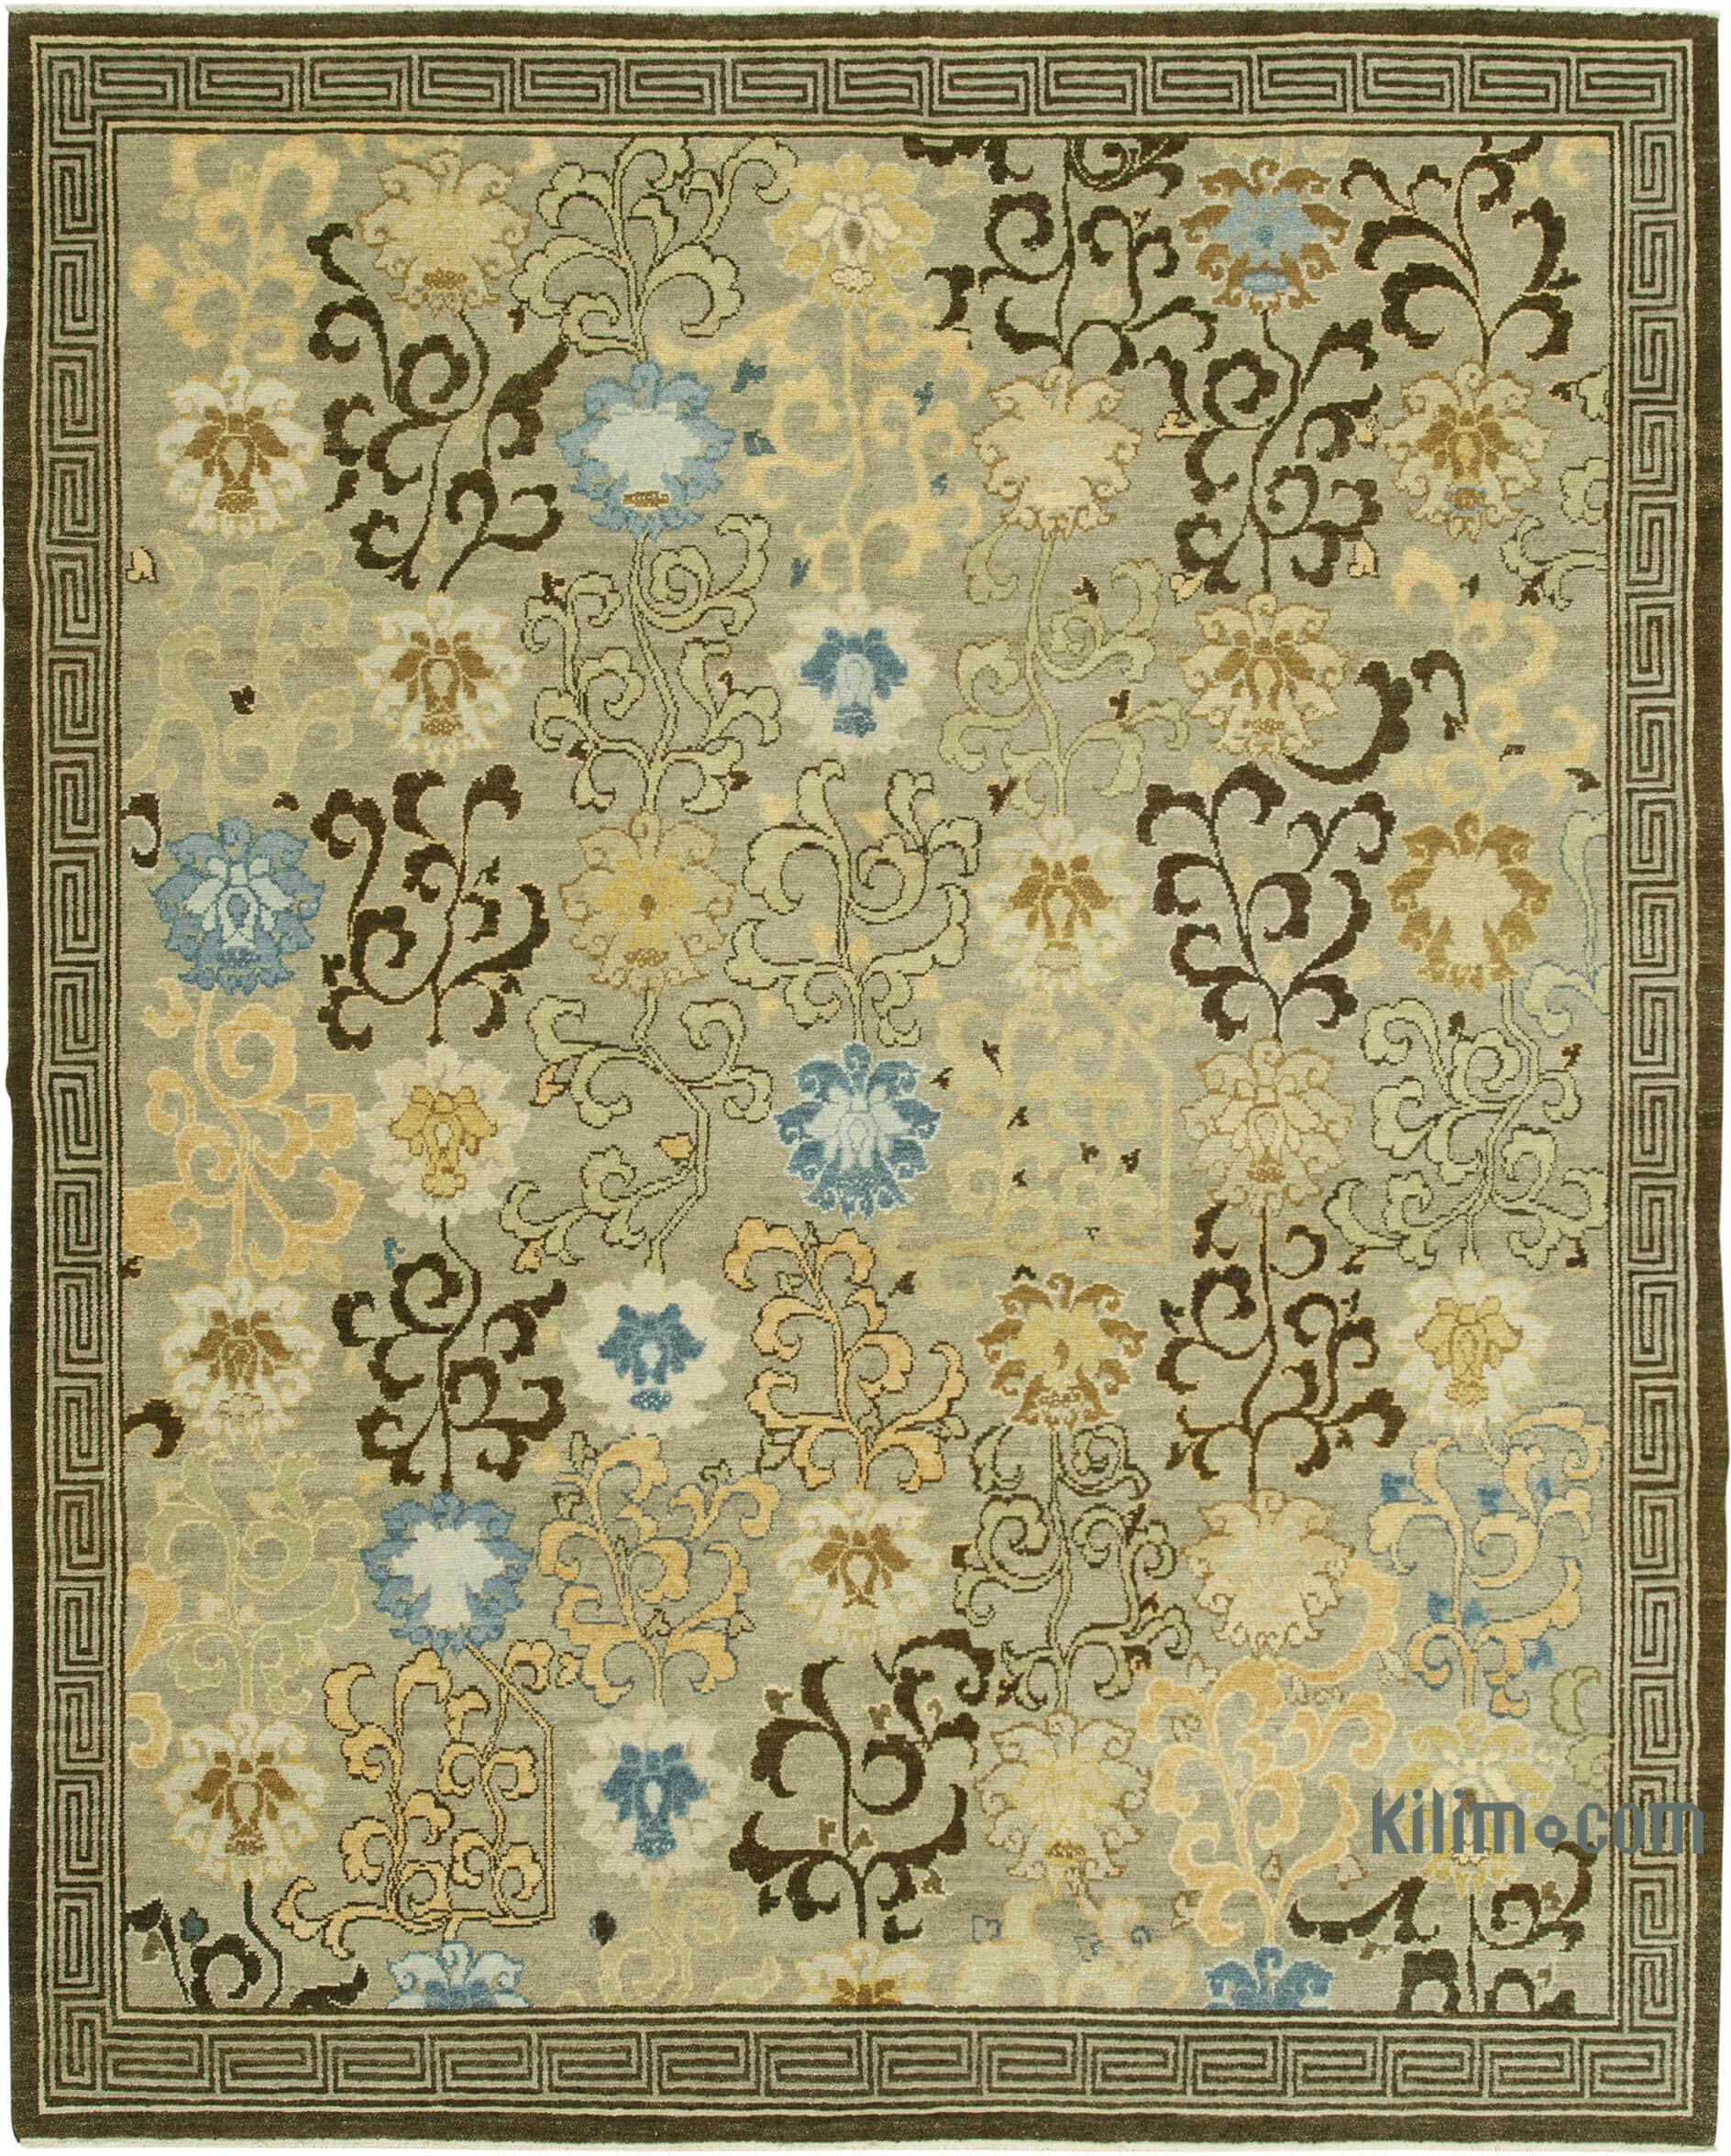 Tan Wool Oushak Hand-Knotted Oriental Rug - 8'11 x 11'8 - 8'11 x 11'8, Tan